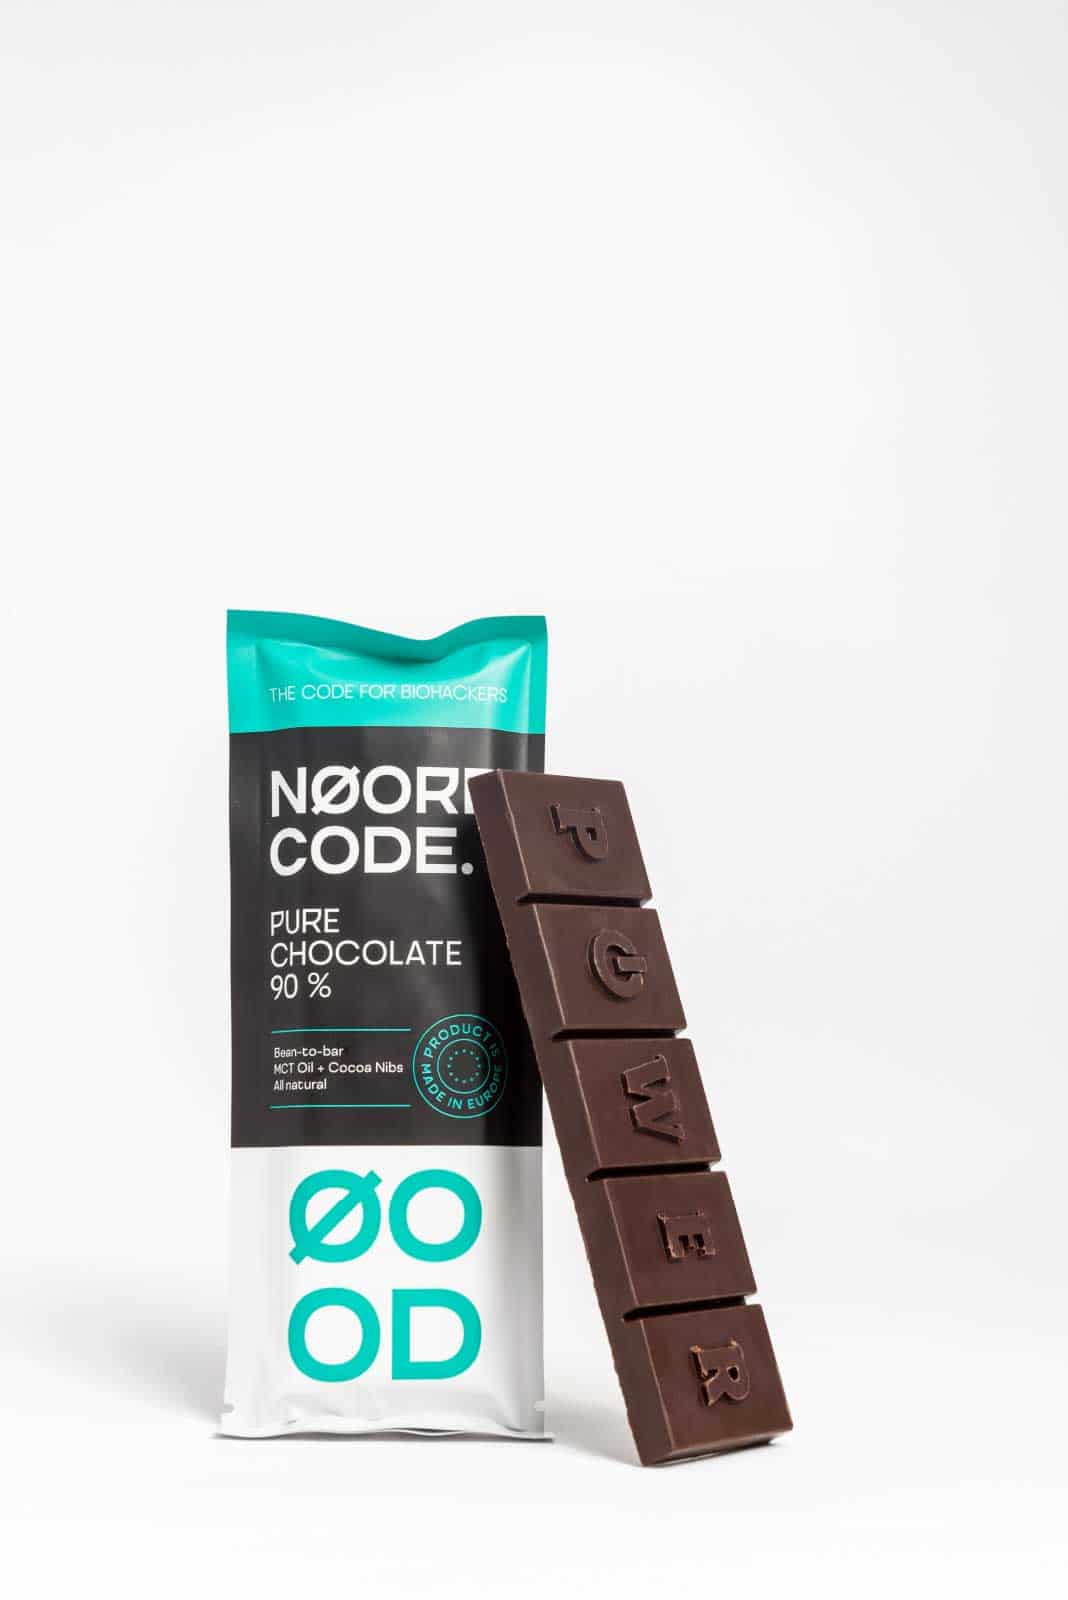 NoordCode Pure Chocolate 90% bei LiveHelfi kaufen